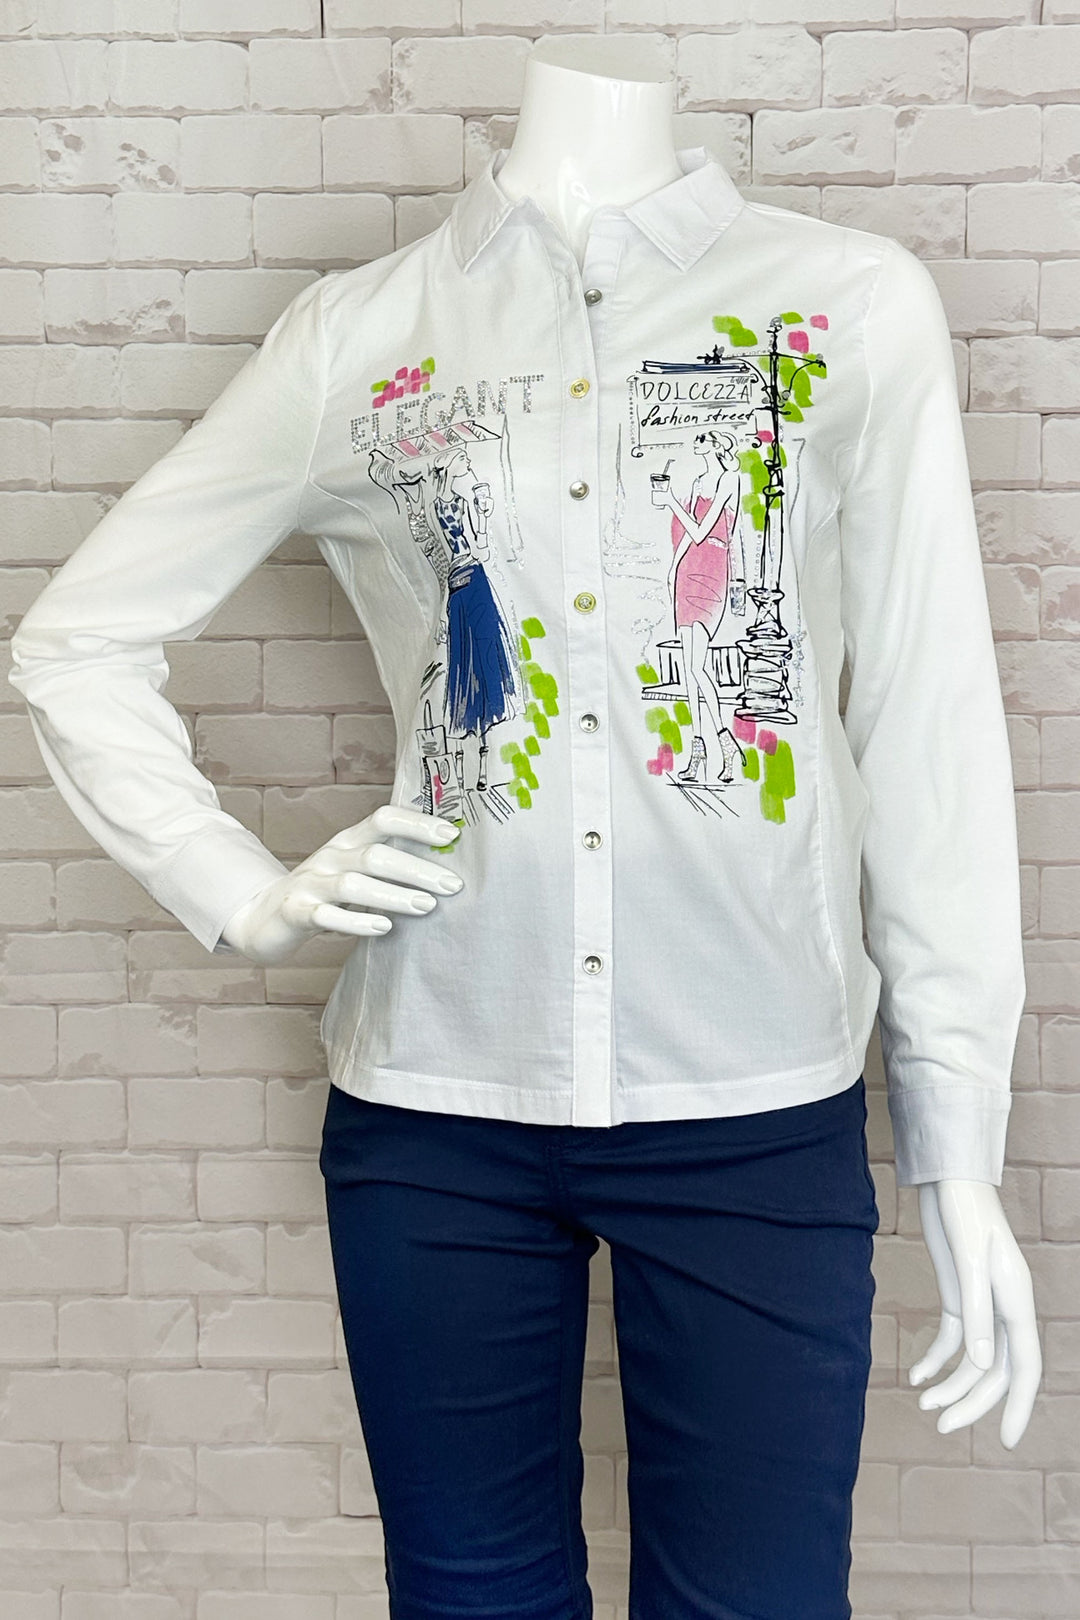 Elainilye Fashion Womens Shirt Long Sleeve Turndown Collar Button Casual  Elastic Comfy Blouse Shirts 